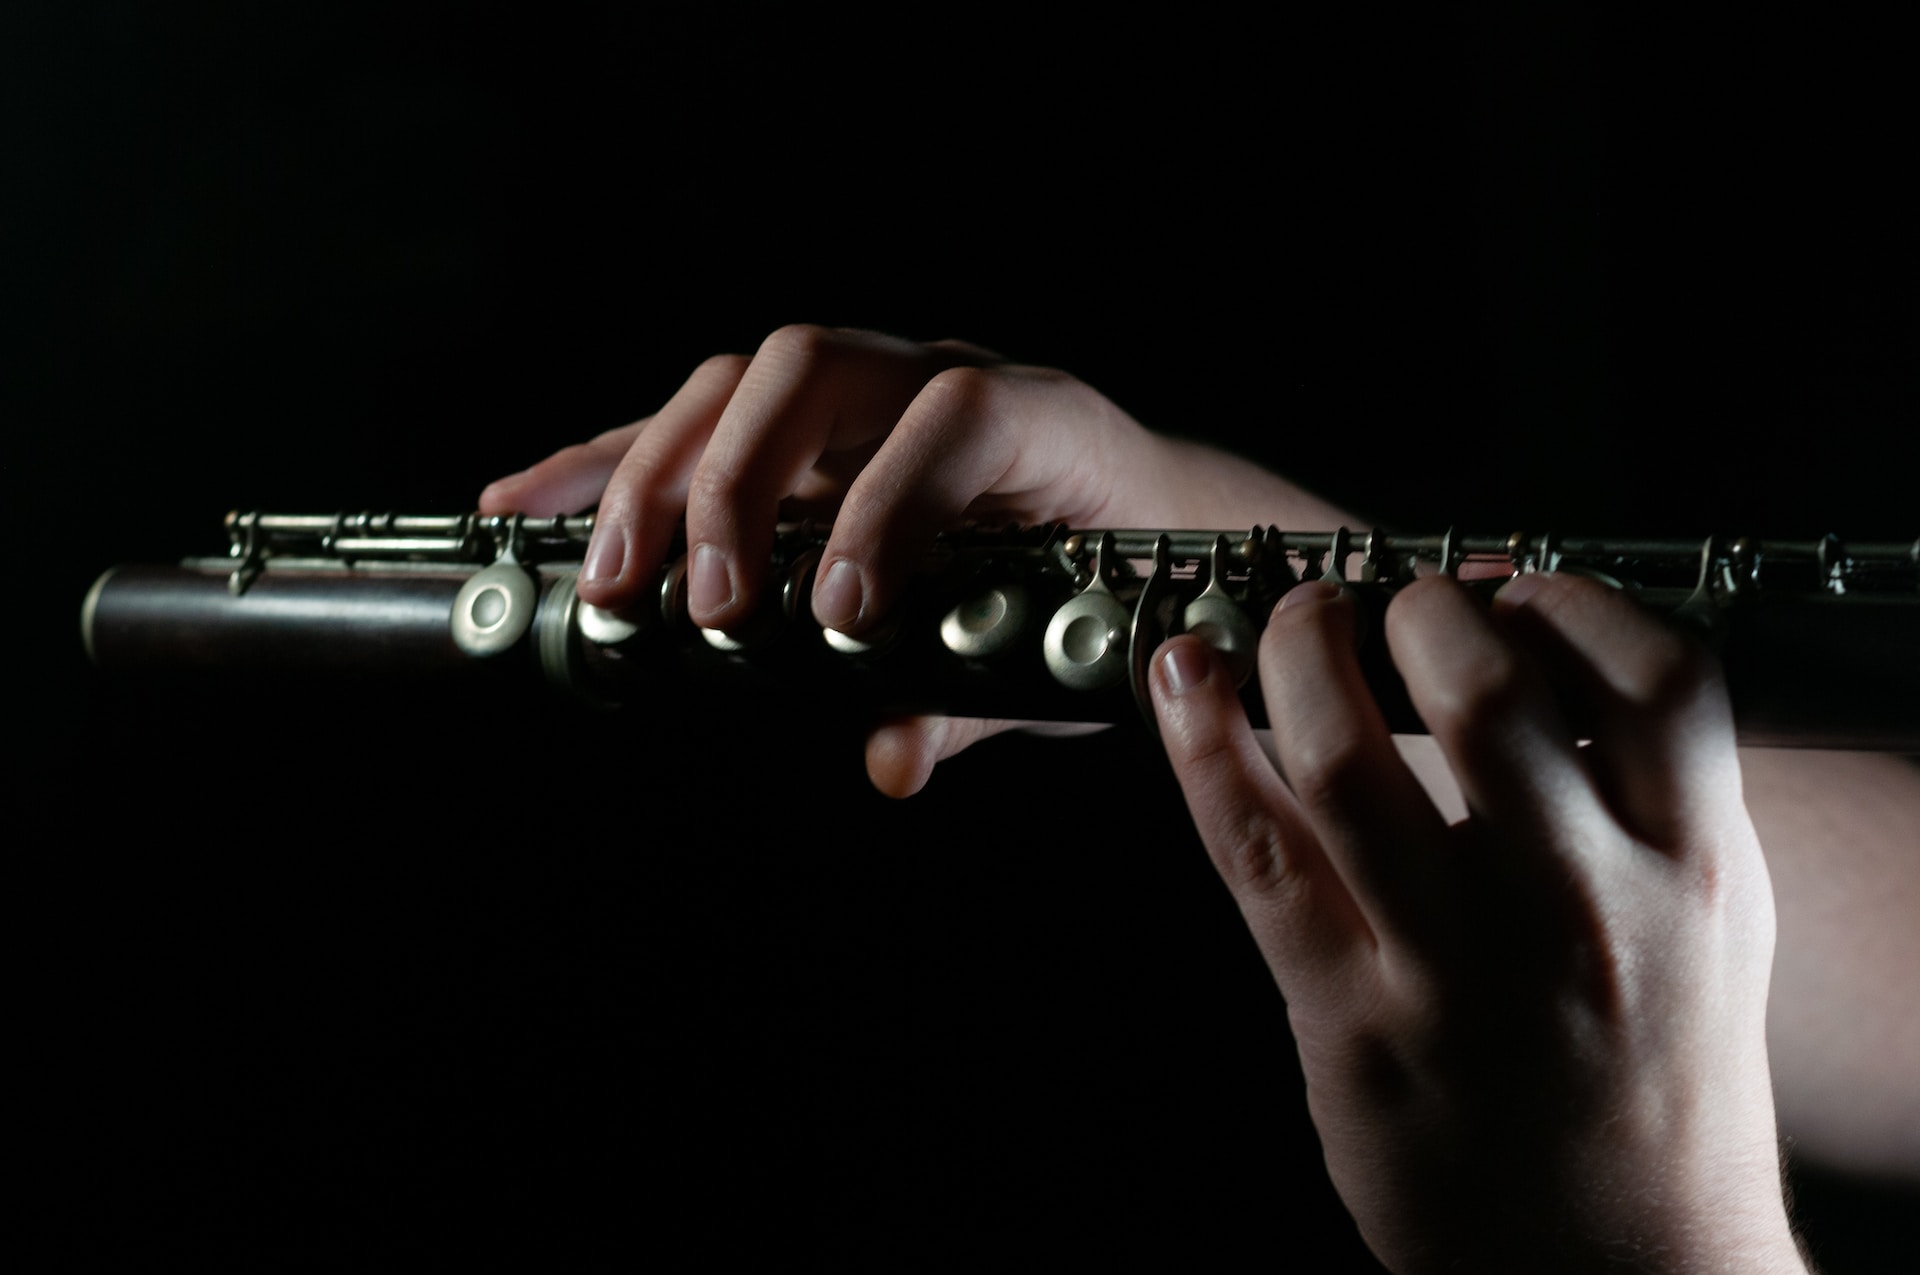 aprende la forma correcta de limpiar una flauta